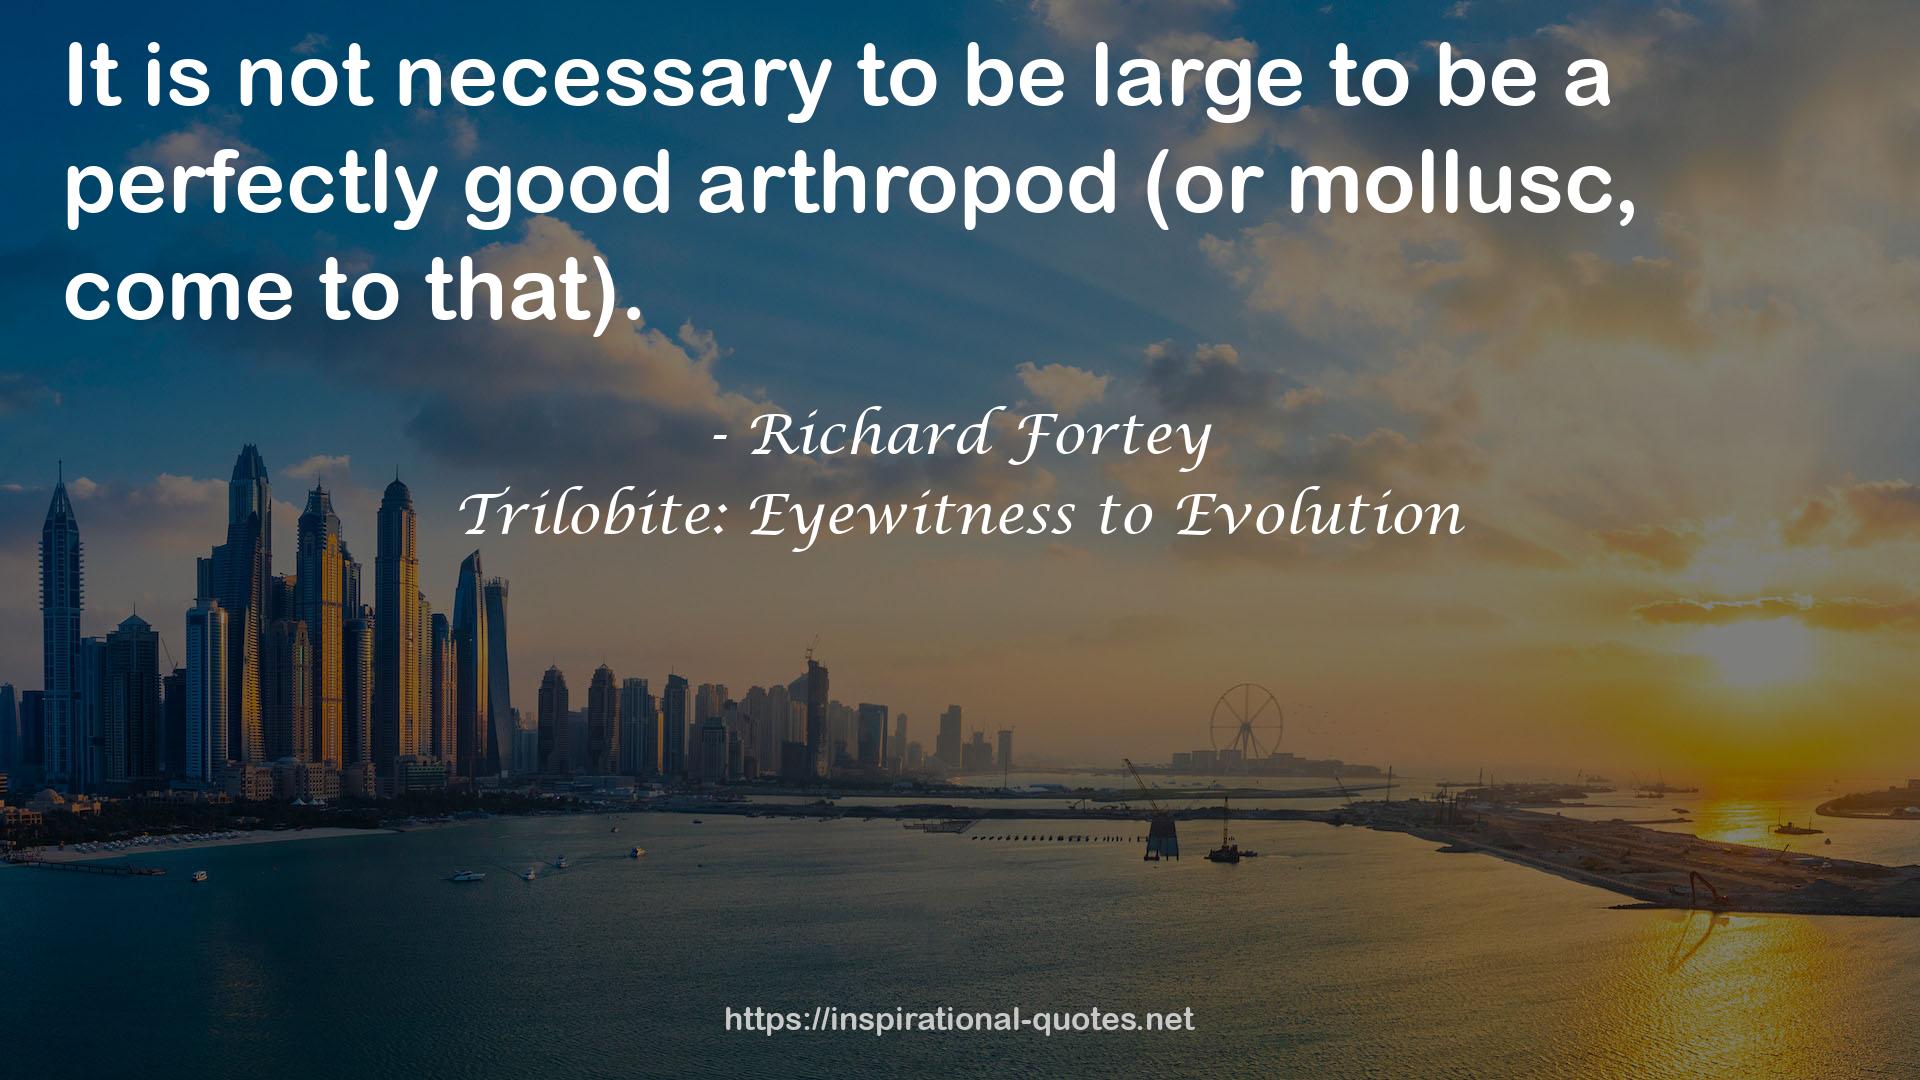 Trilobite: Eyewitness to Evolution QUOTES